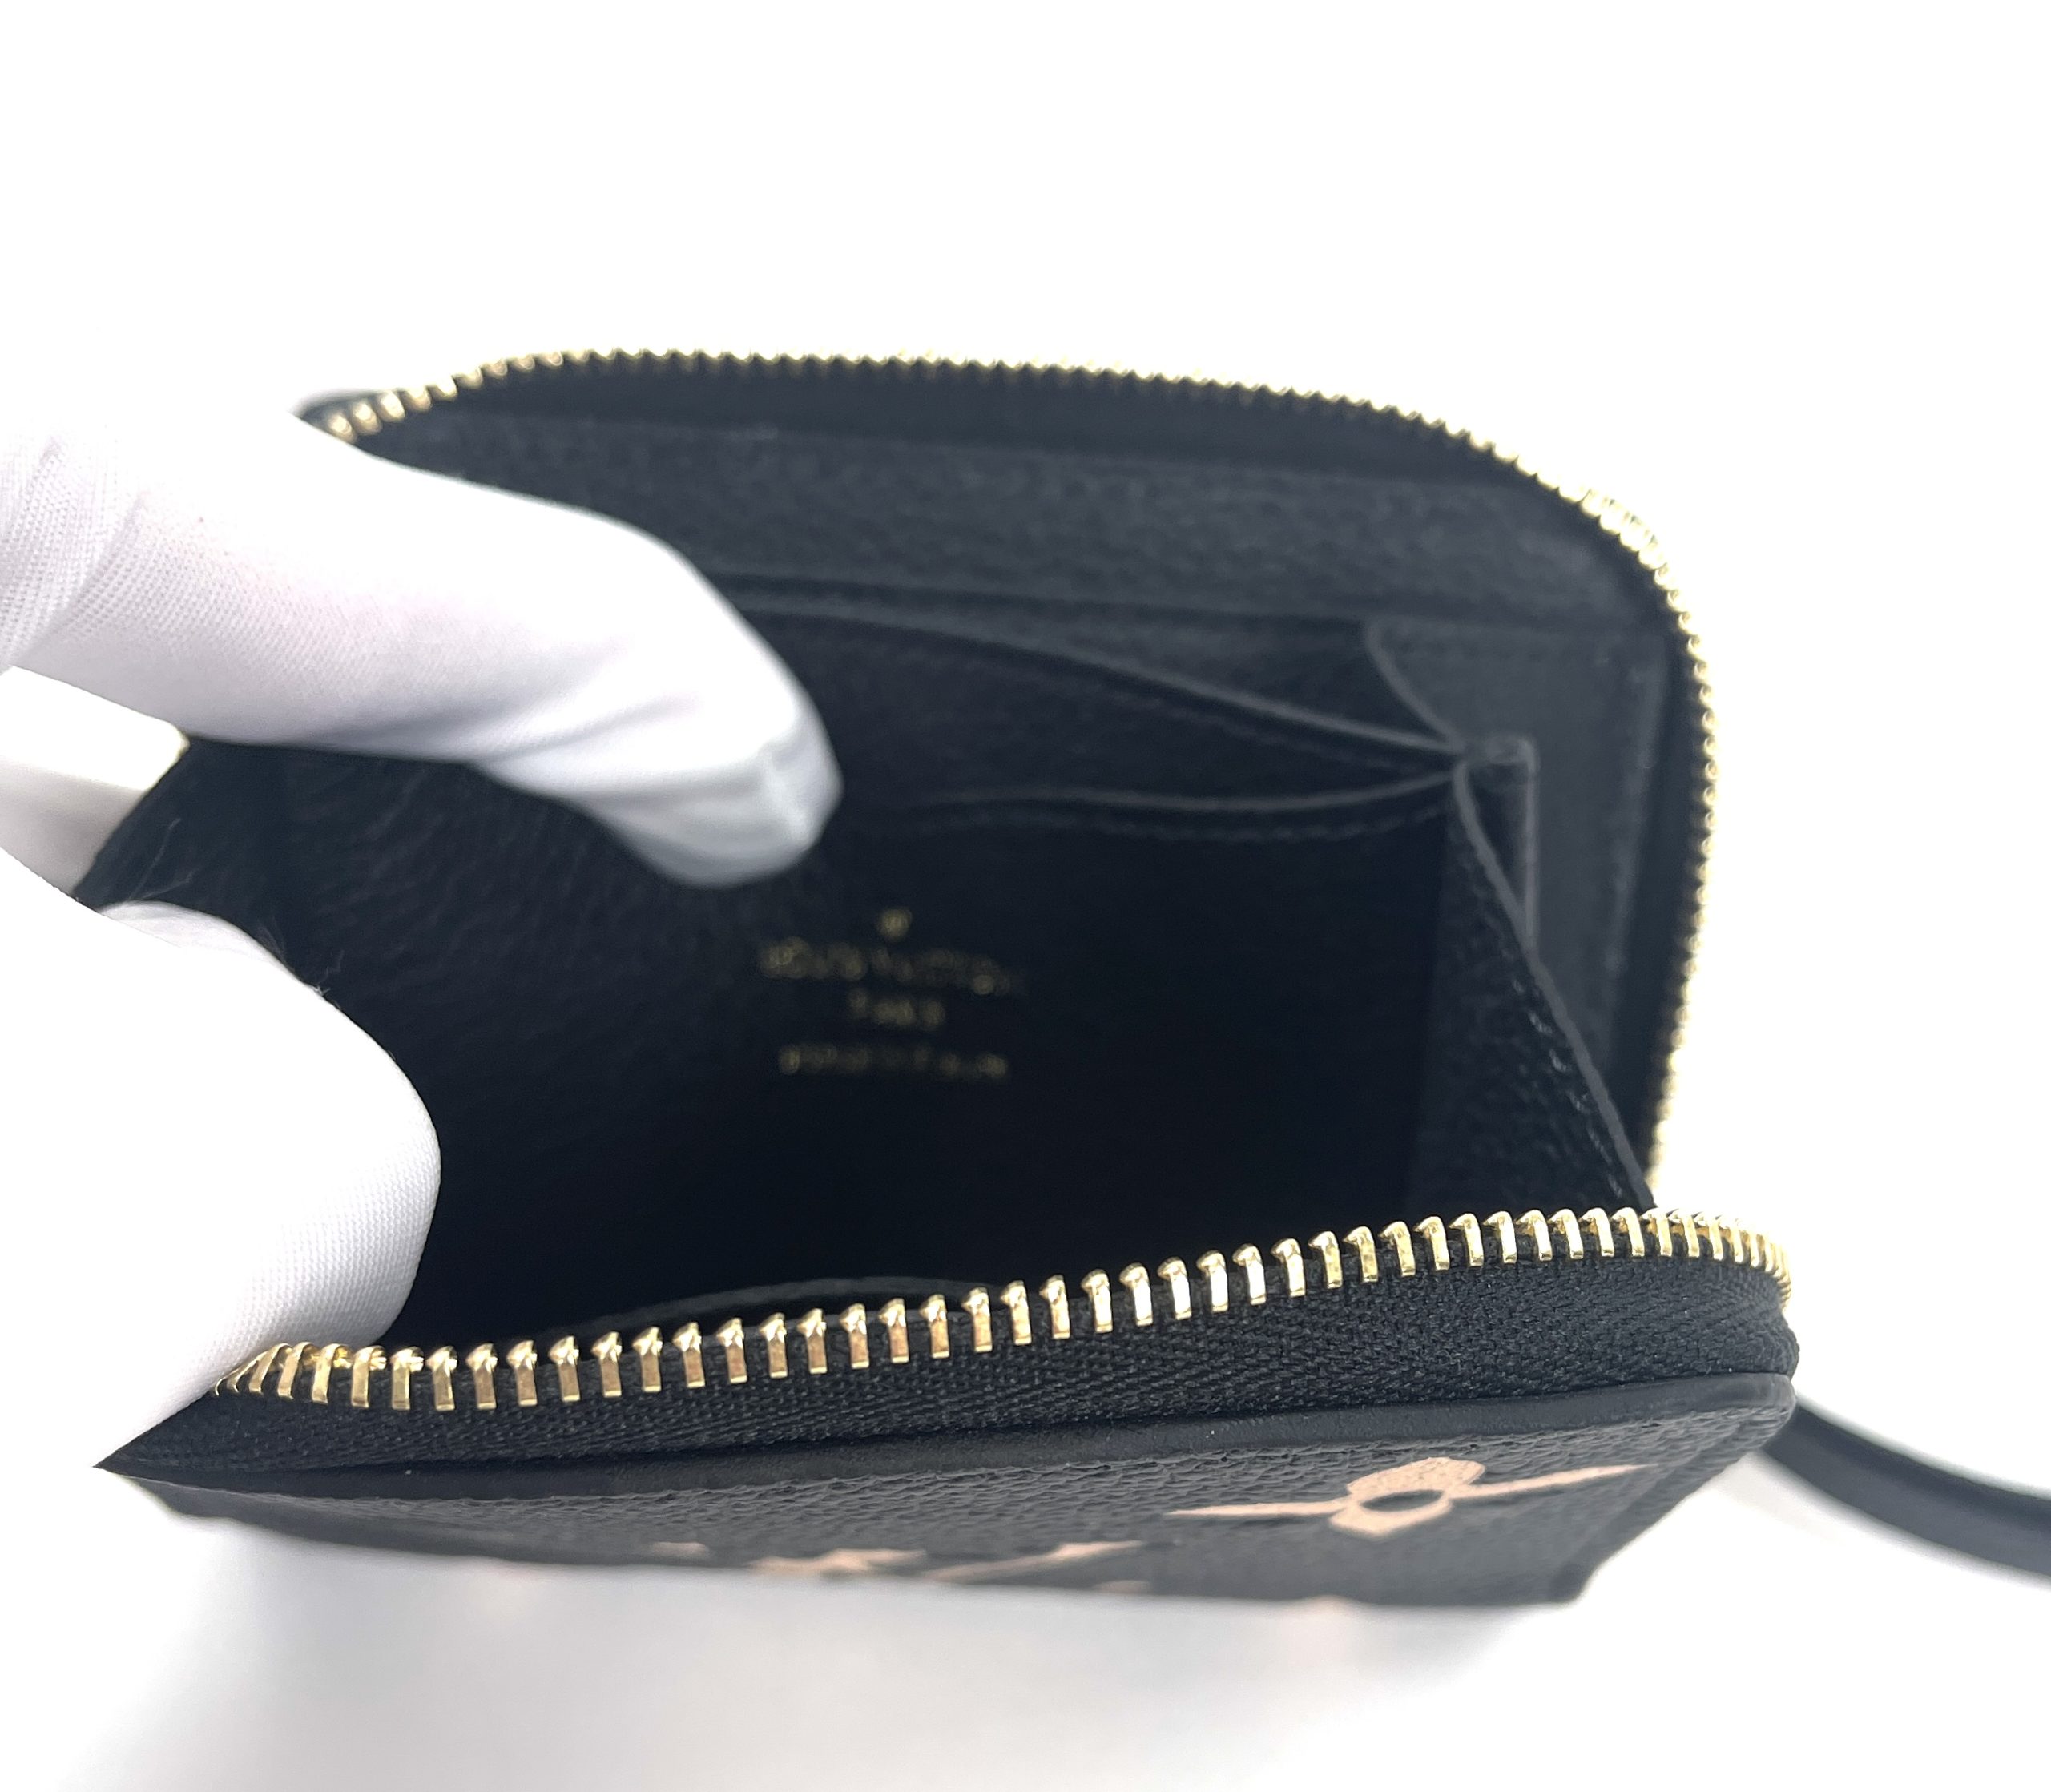 Louis Vuitton, Black Empreinte Coin/Key Pouch